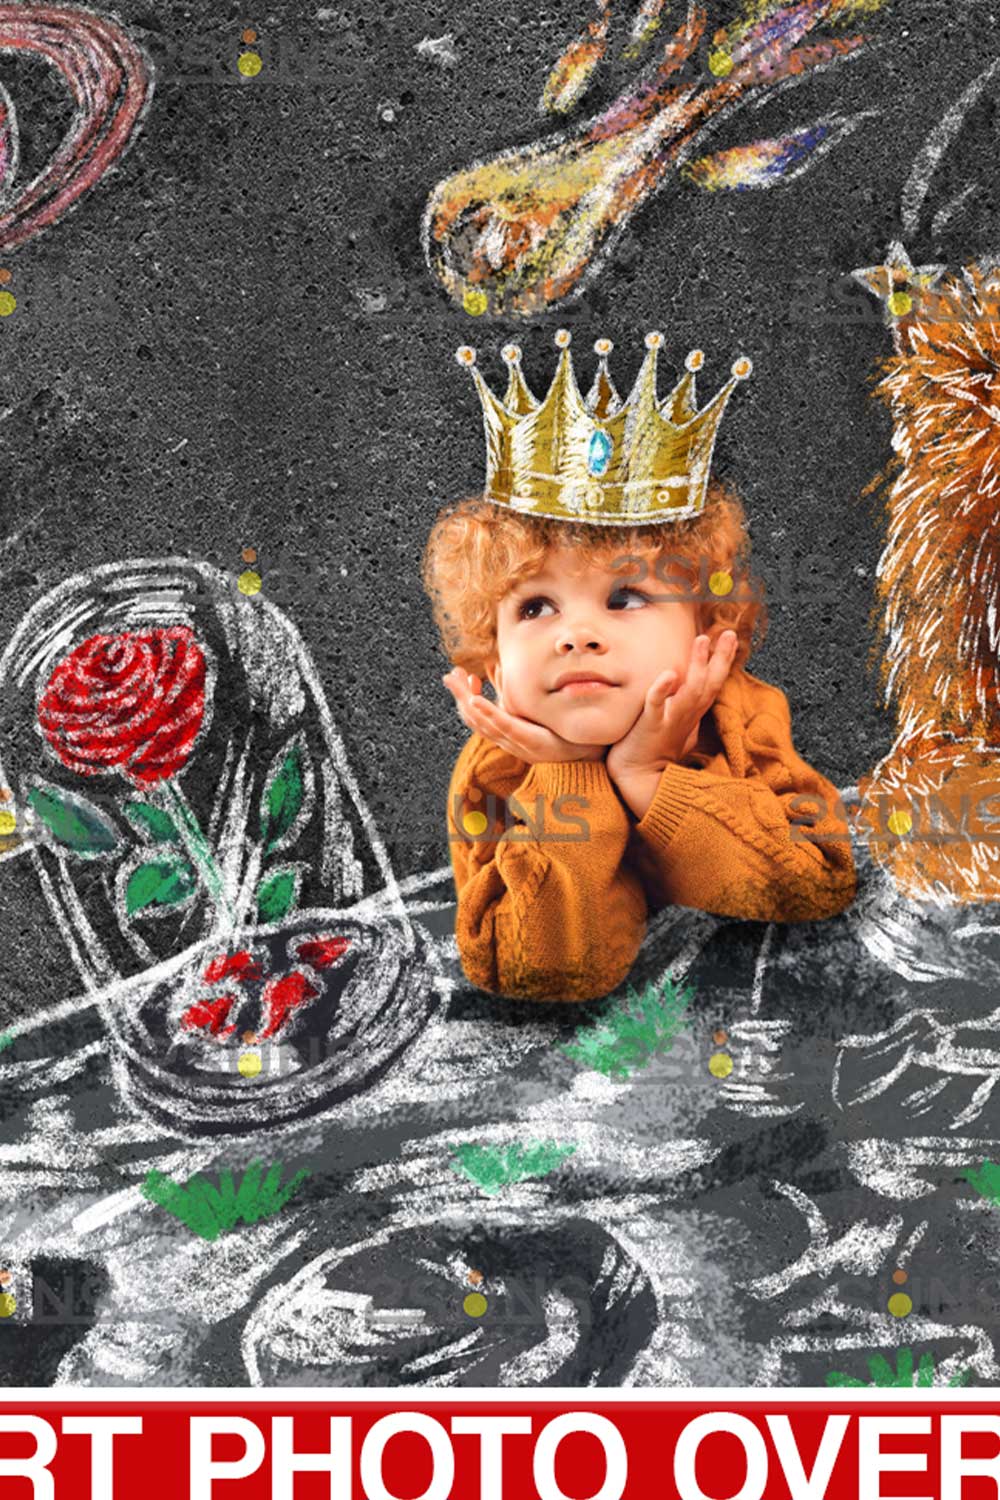 The Little Prince Sidewalk Chalk Art Overlay pinterest image.